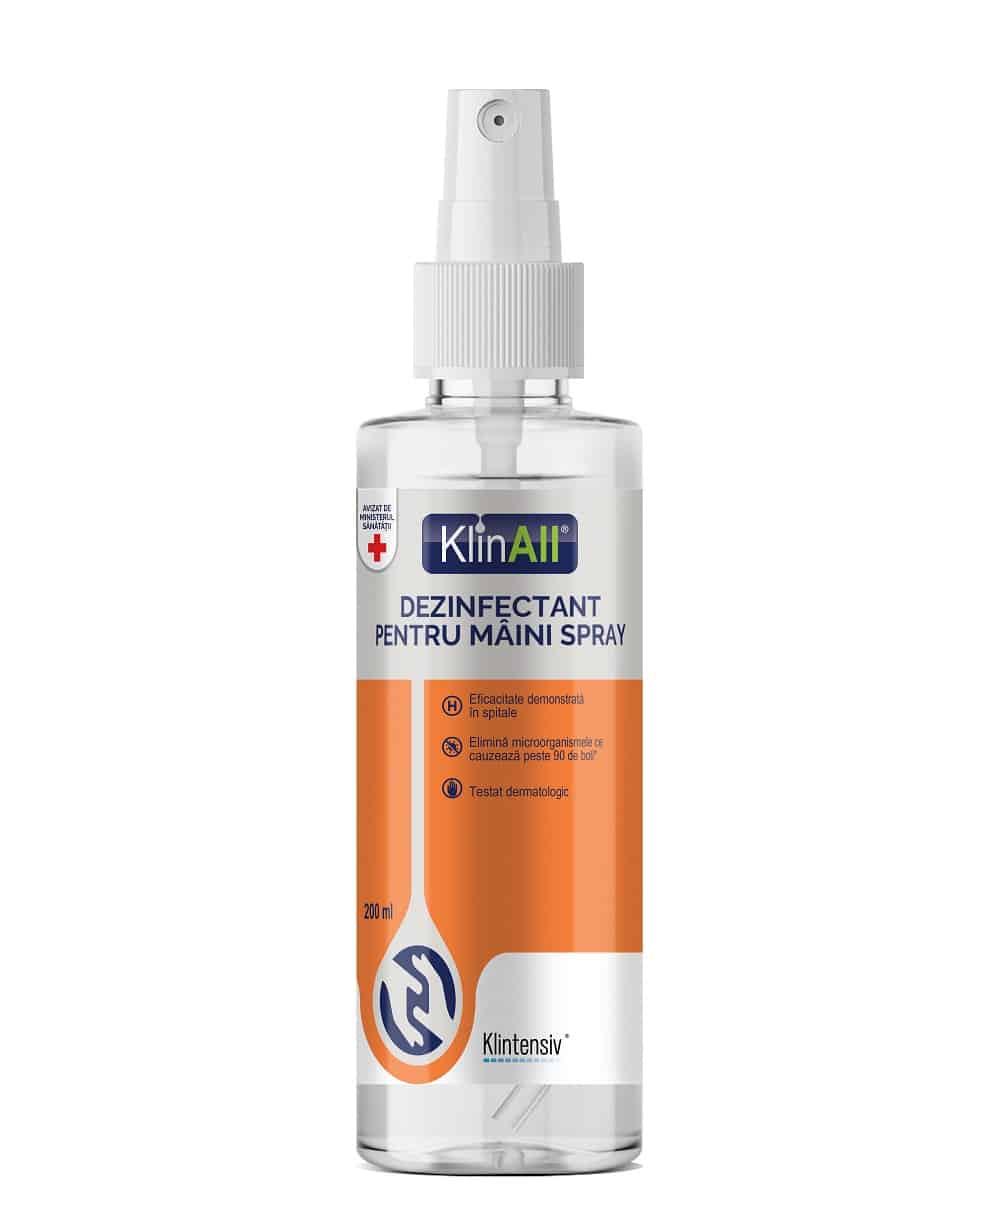 KlinAll® – Dezinfectant pentru maini spray 200 ml